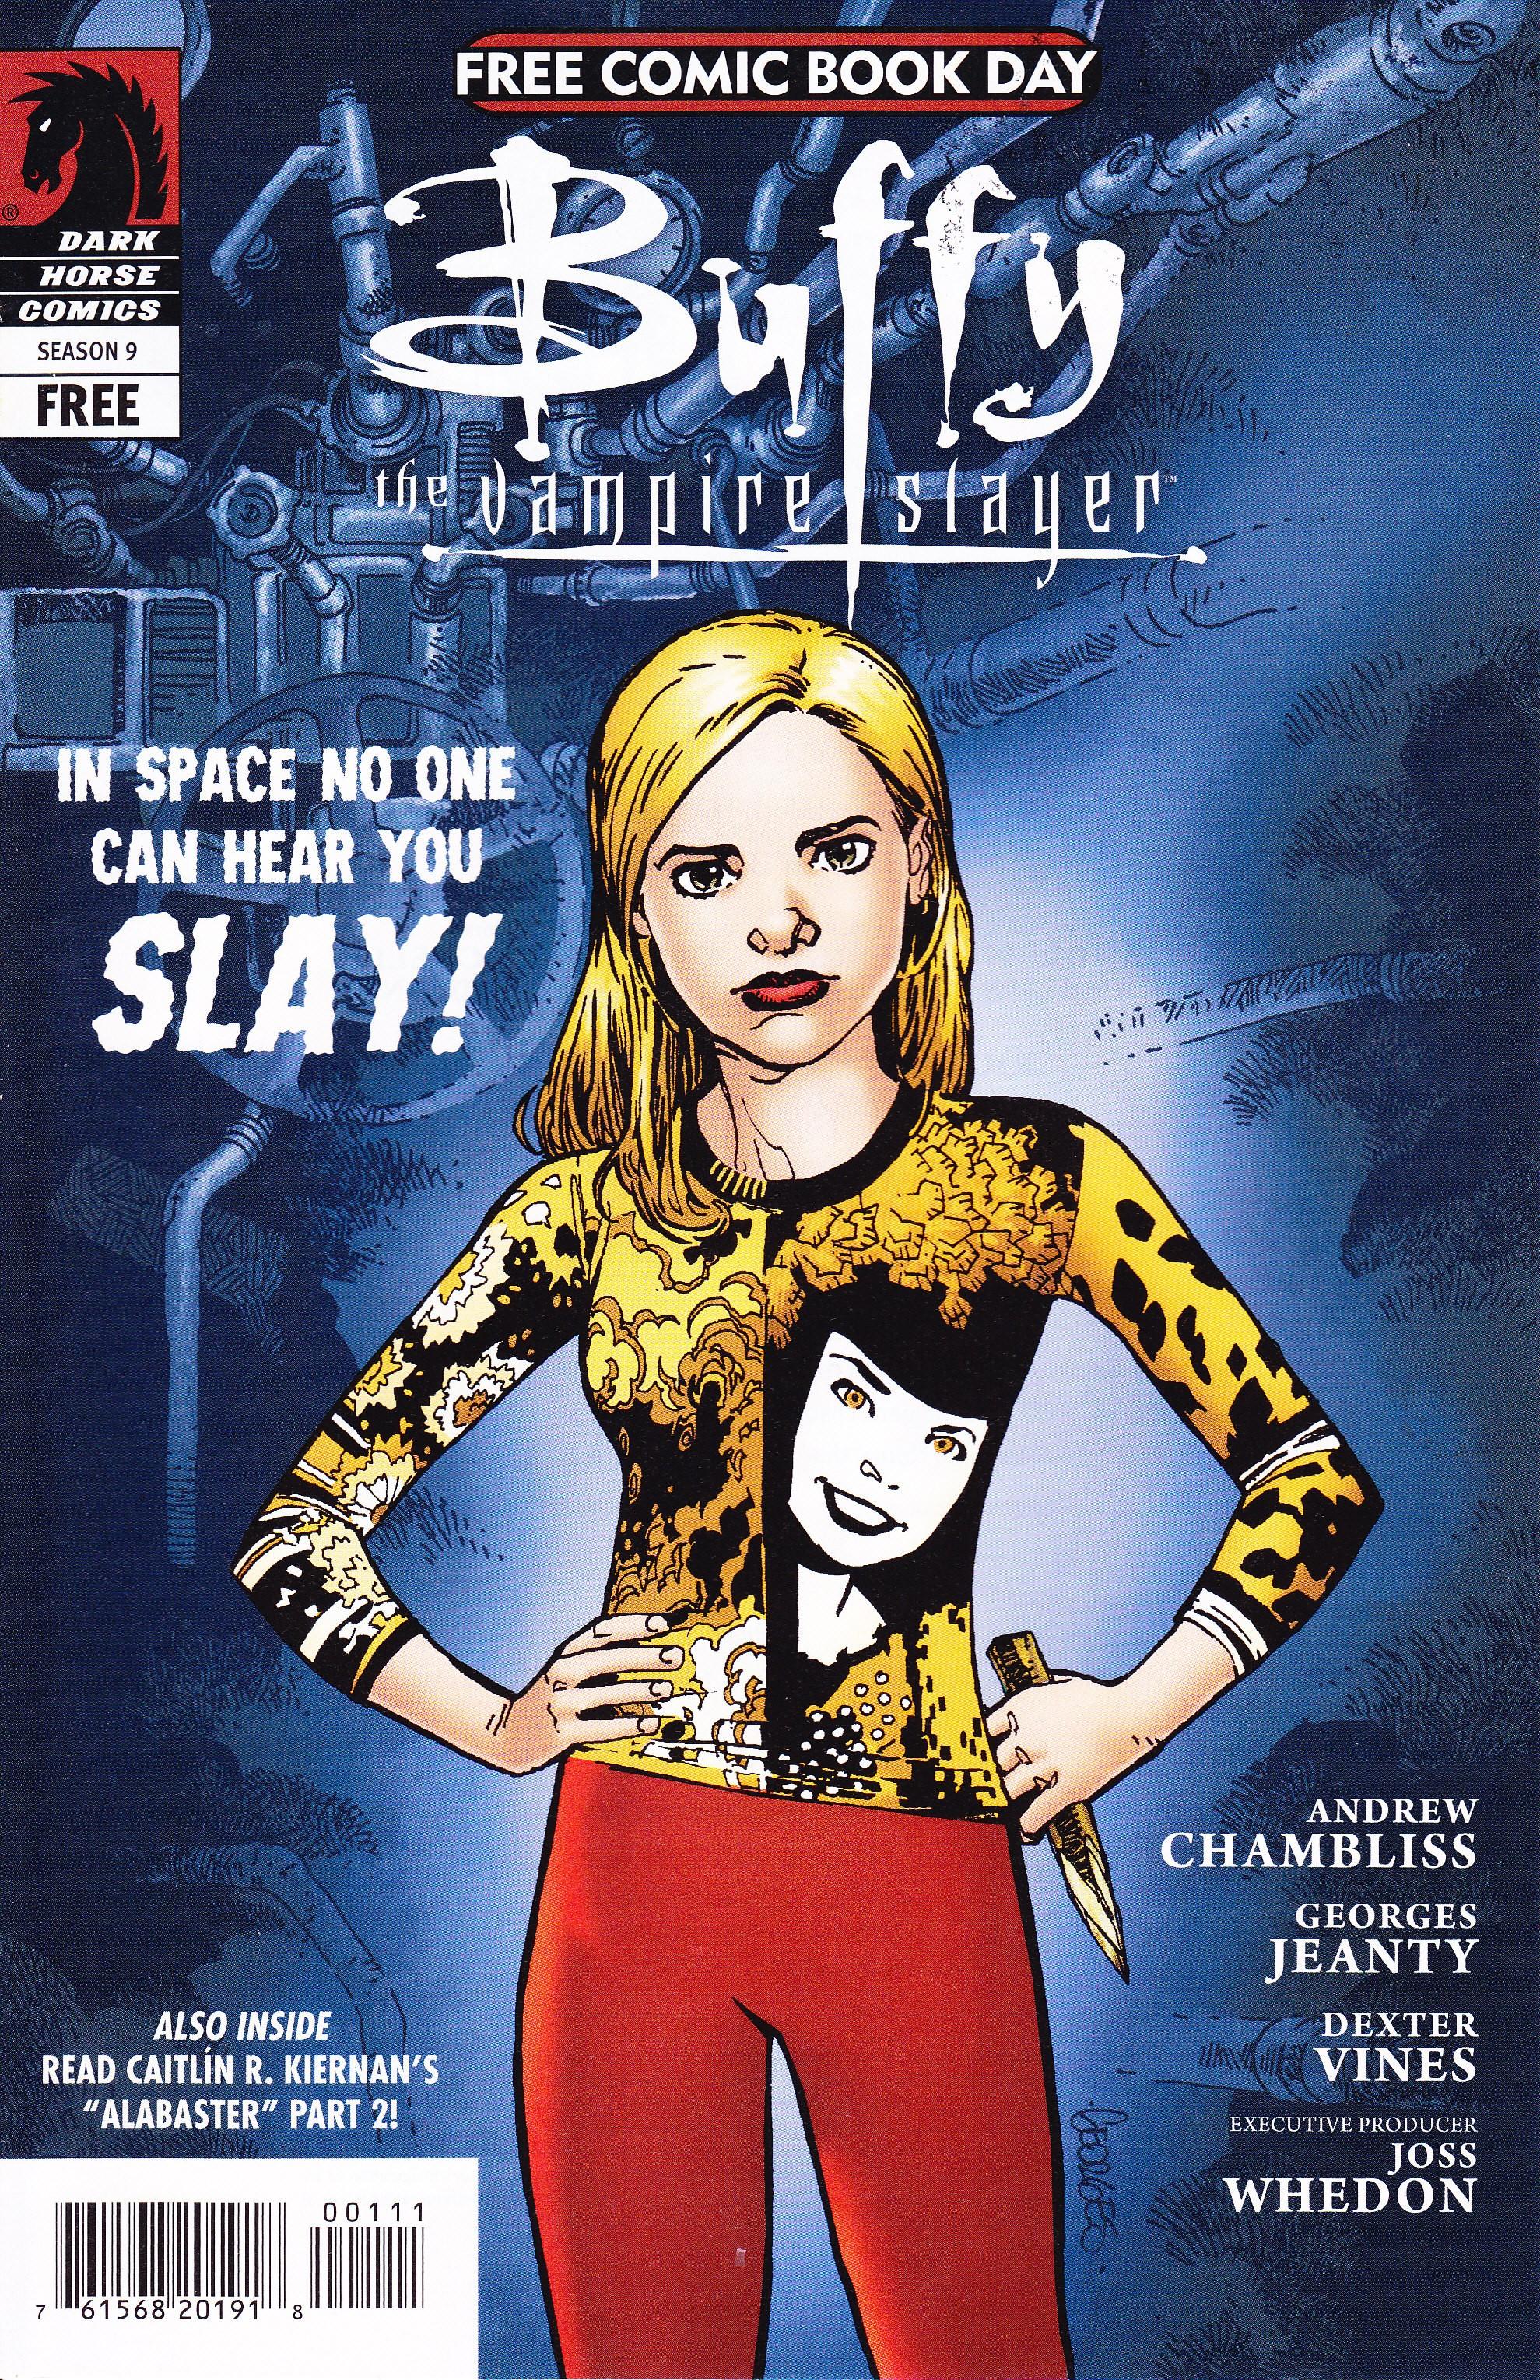 Buffy The Vampire Slayer Season 9 Free comic book day